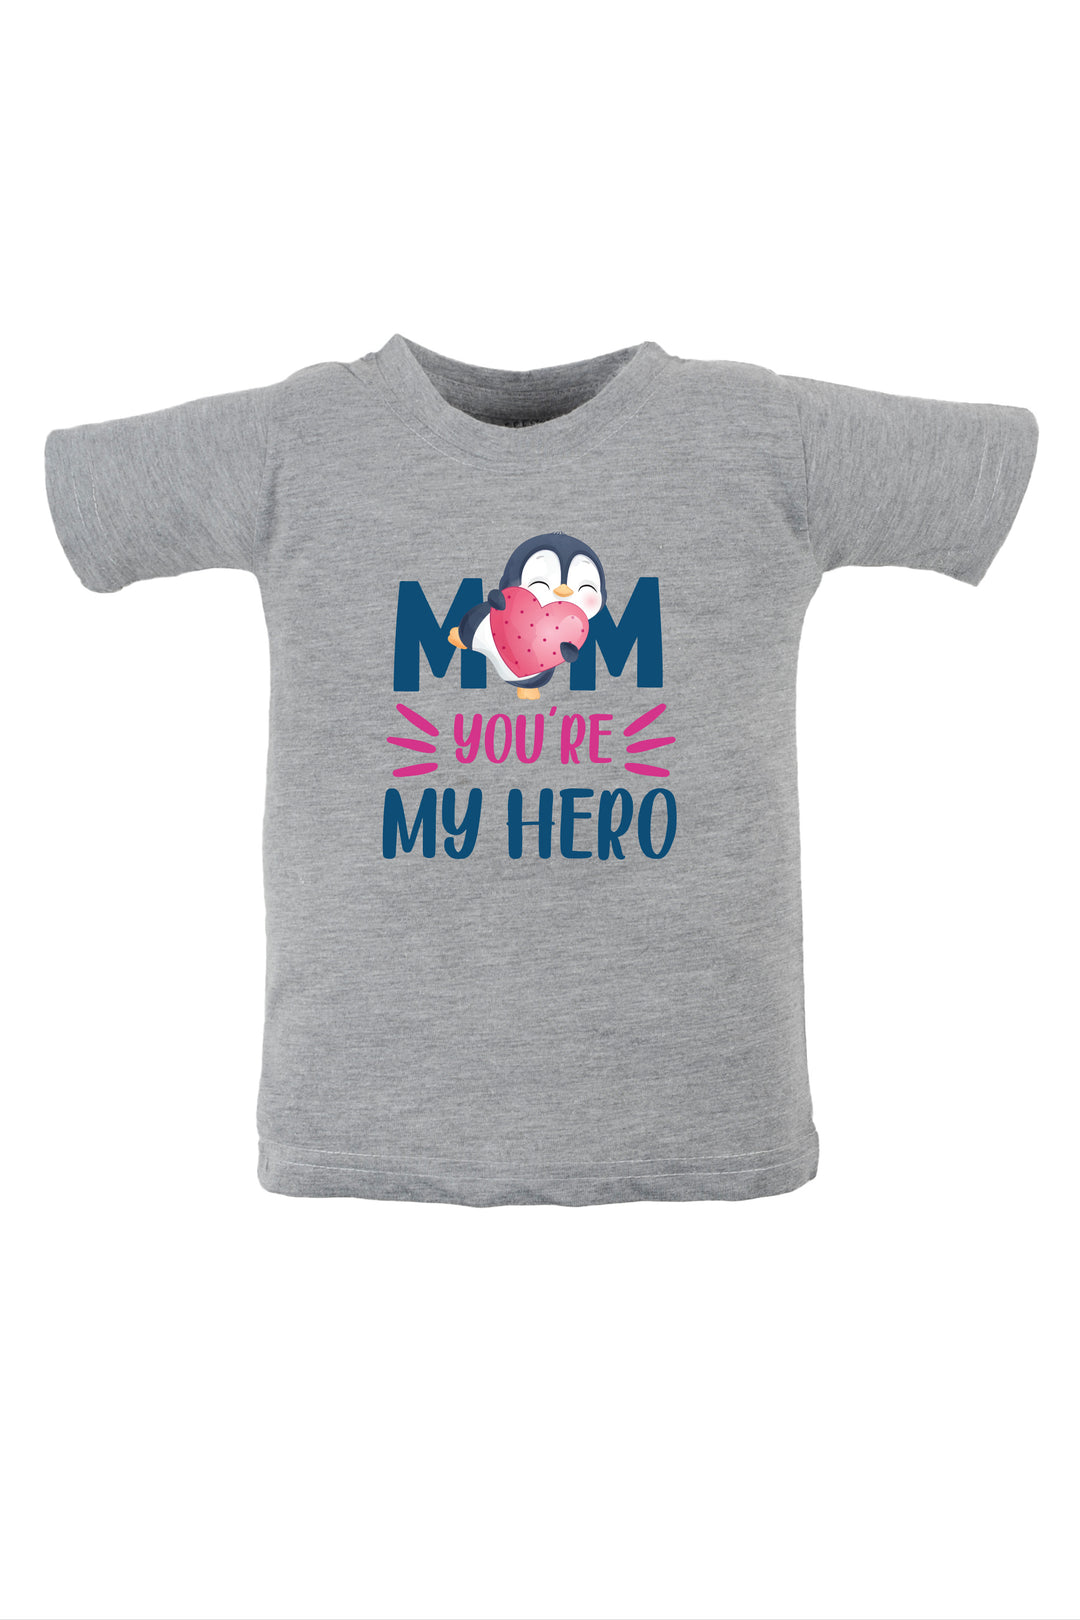 Mom You're My Hero